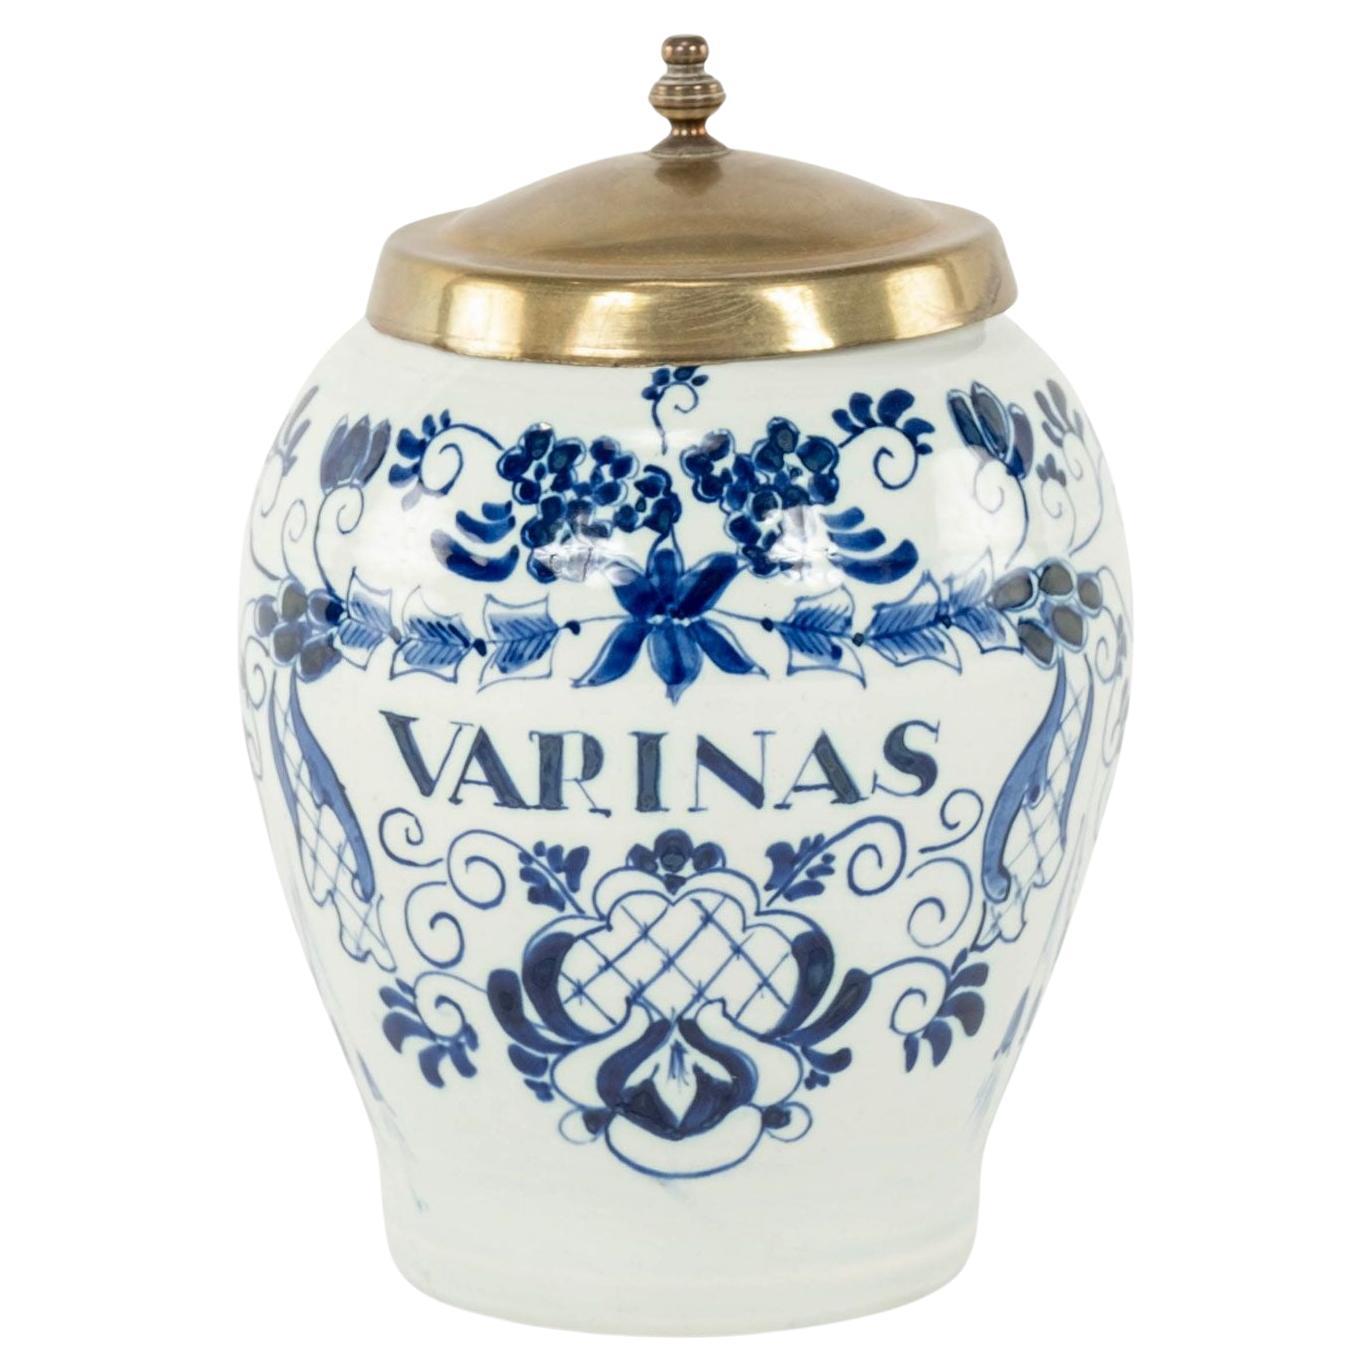 Delft Blue and White "Varinas" Tobacco Jar